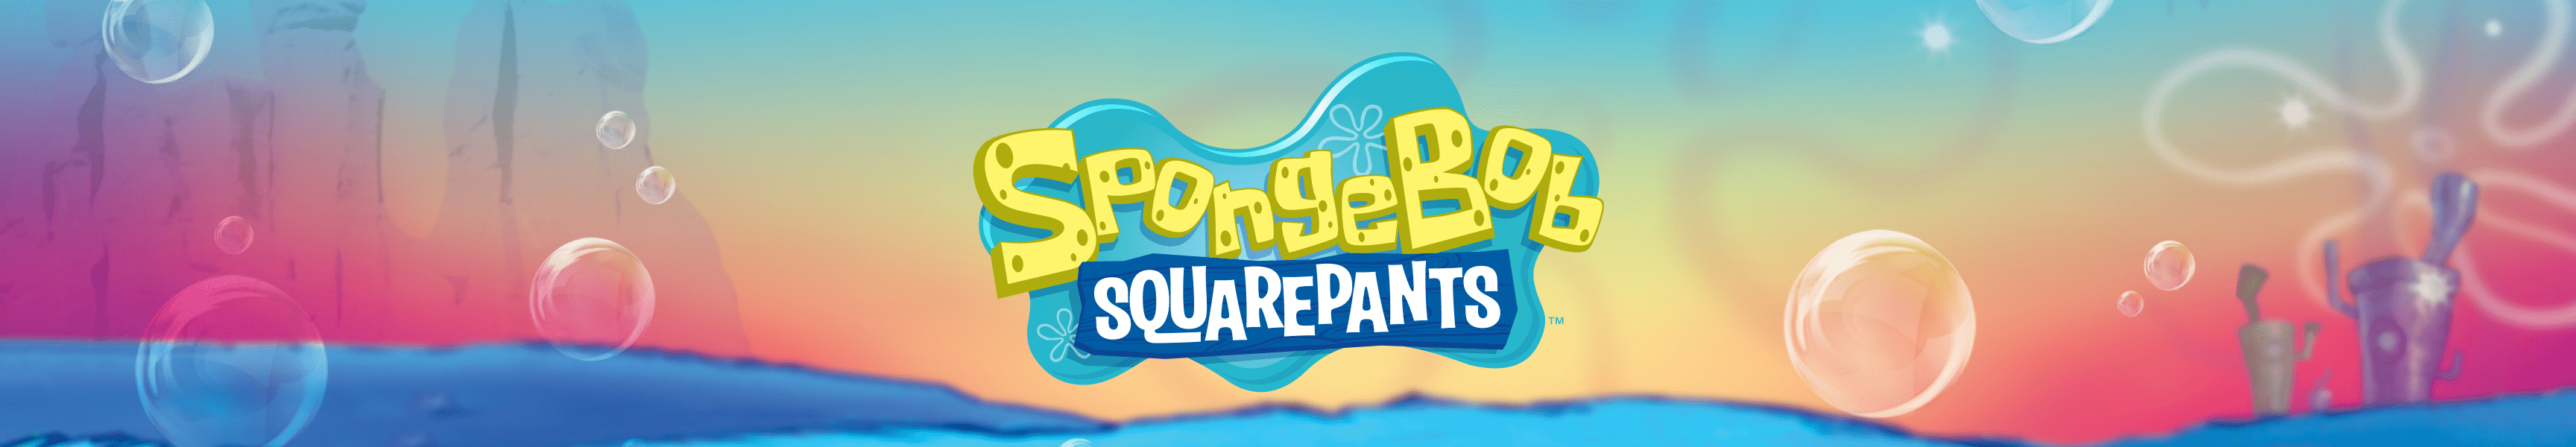 SpongeBob SquarePants Yoga Mats